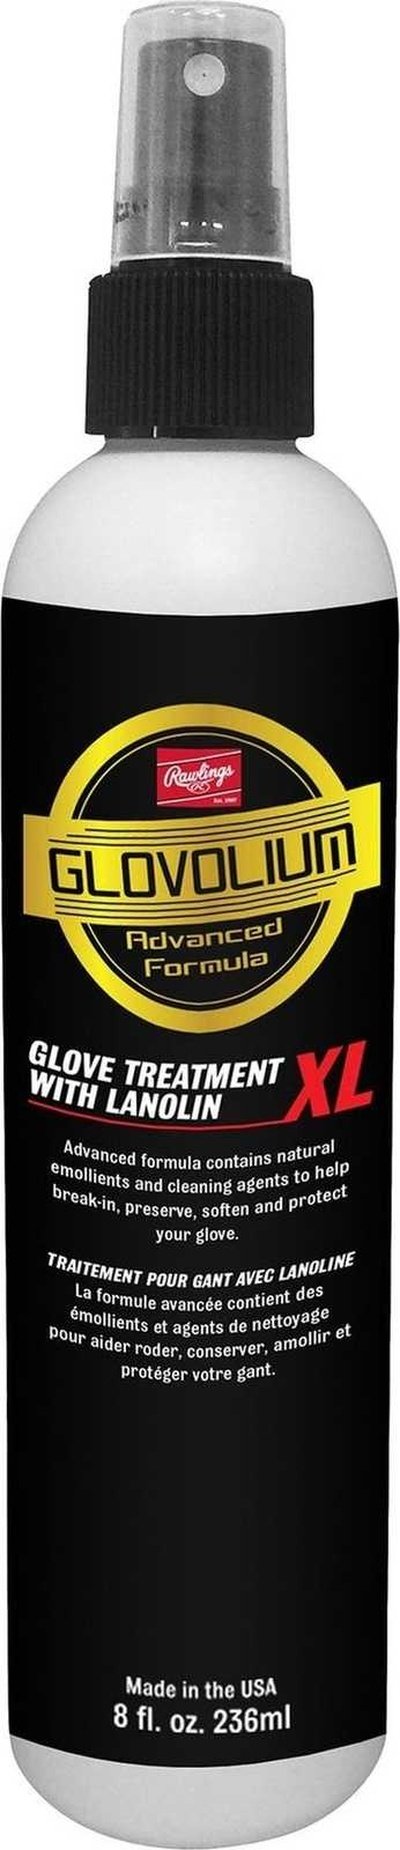 Rawlings Glovolium Advanced Formula Spray G25XL 8 oz - HIT a Double - 1